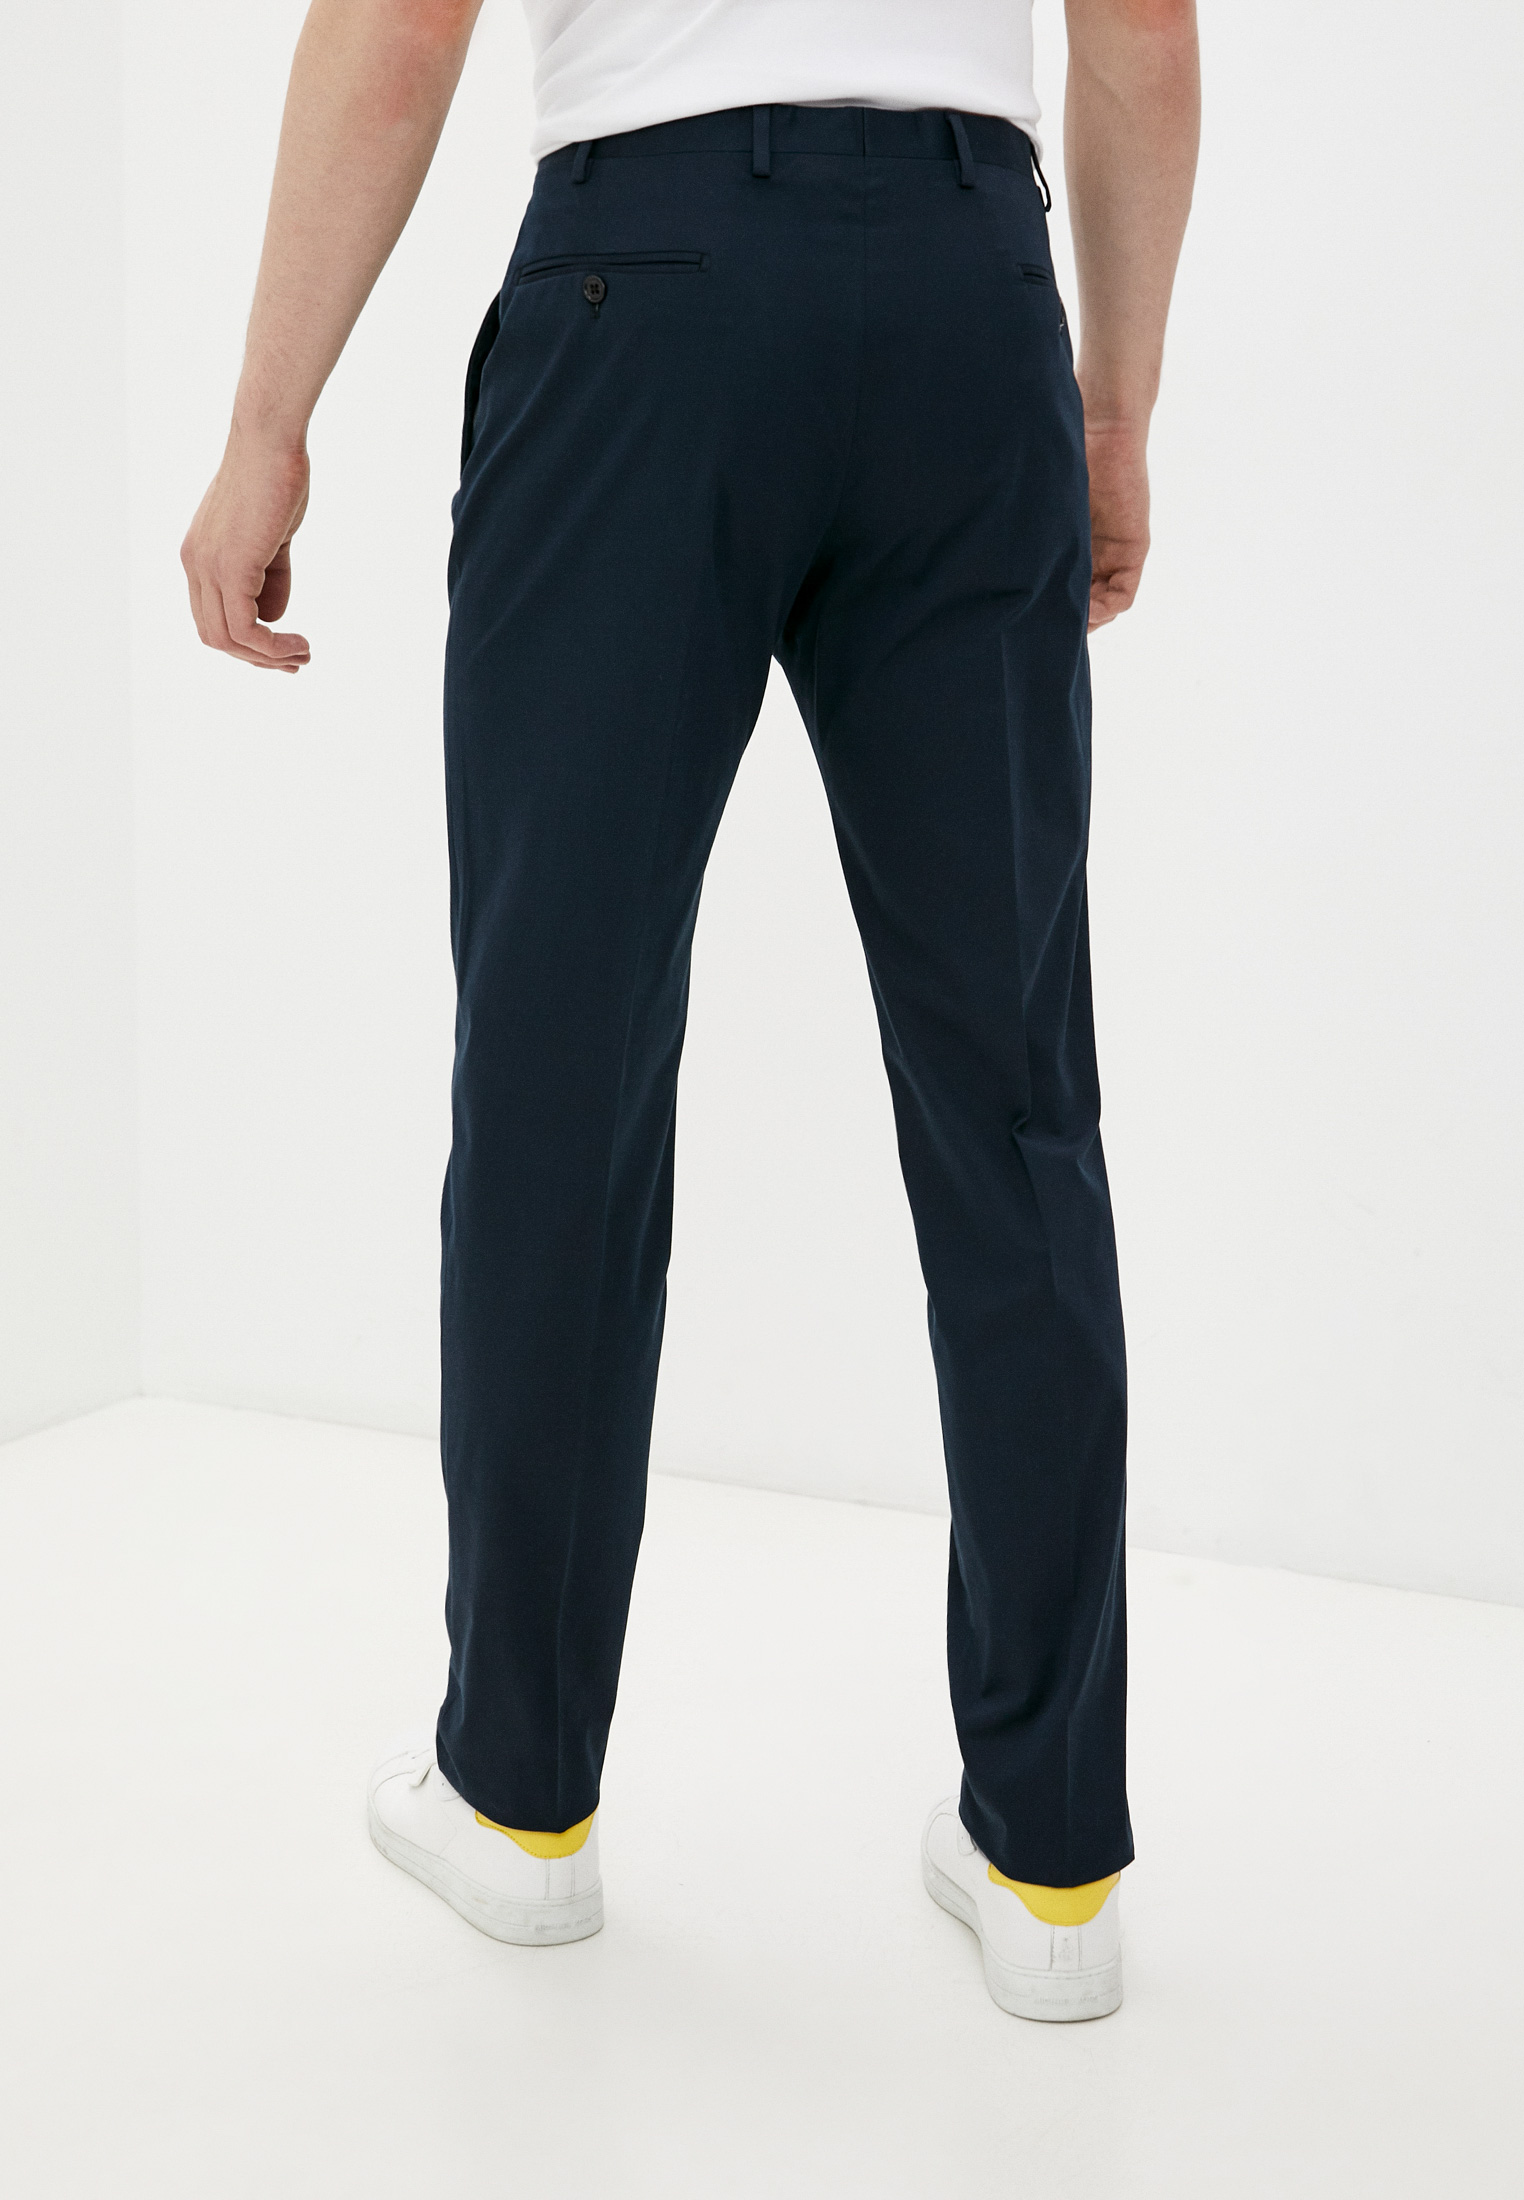 Мужские классические брюки Emporio Armani (Эмпорио Армани) W1P0M0 W1517: изображение 4